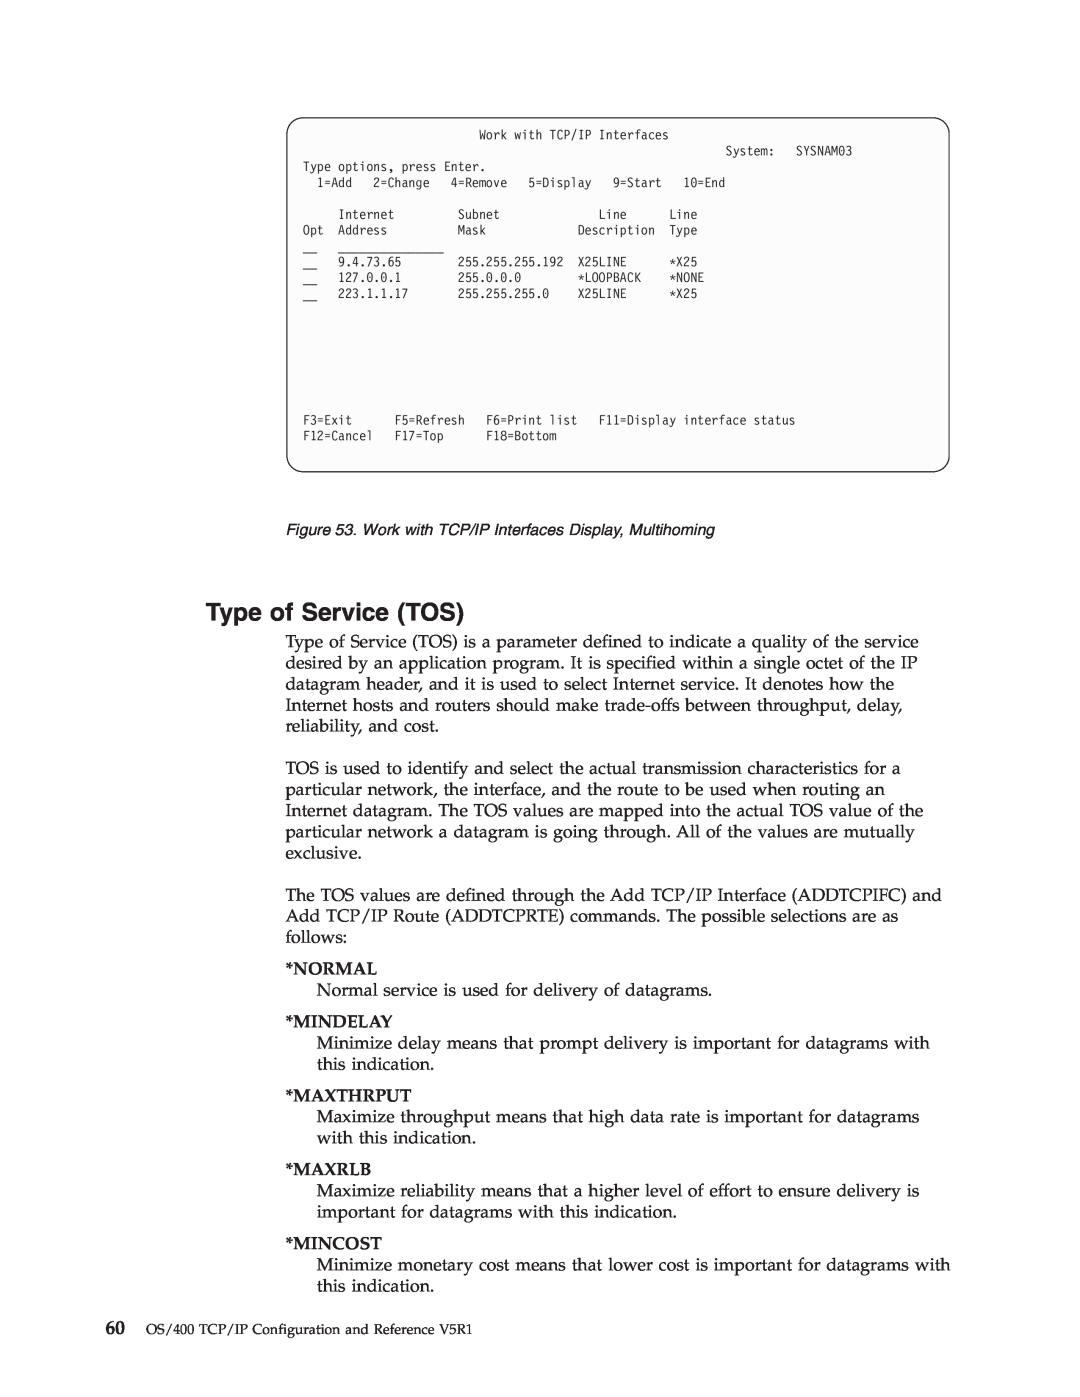 IBM SC41-5420-04 manual Normal, Mindelay, Maxthrput, Maxrlb, Mincost 